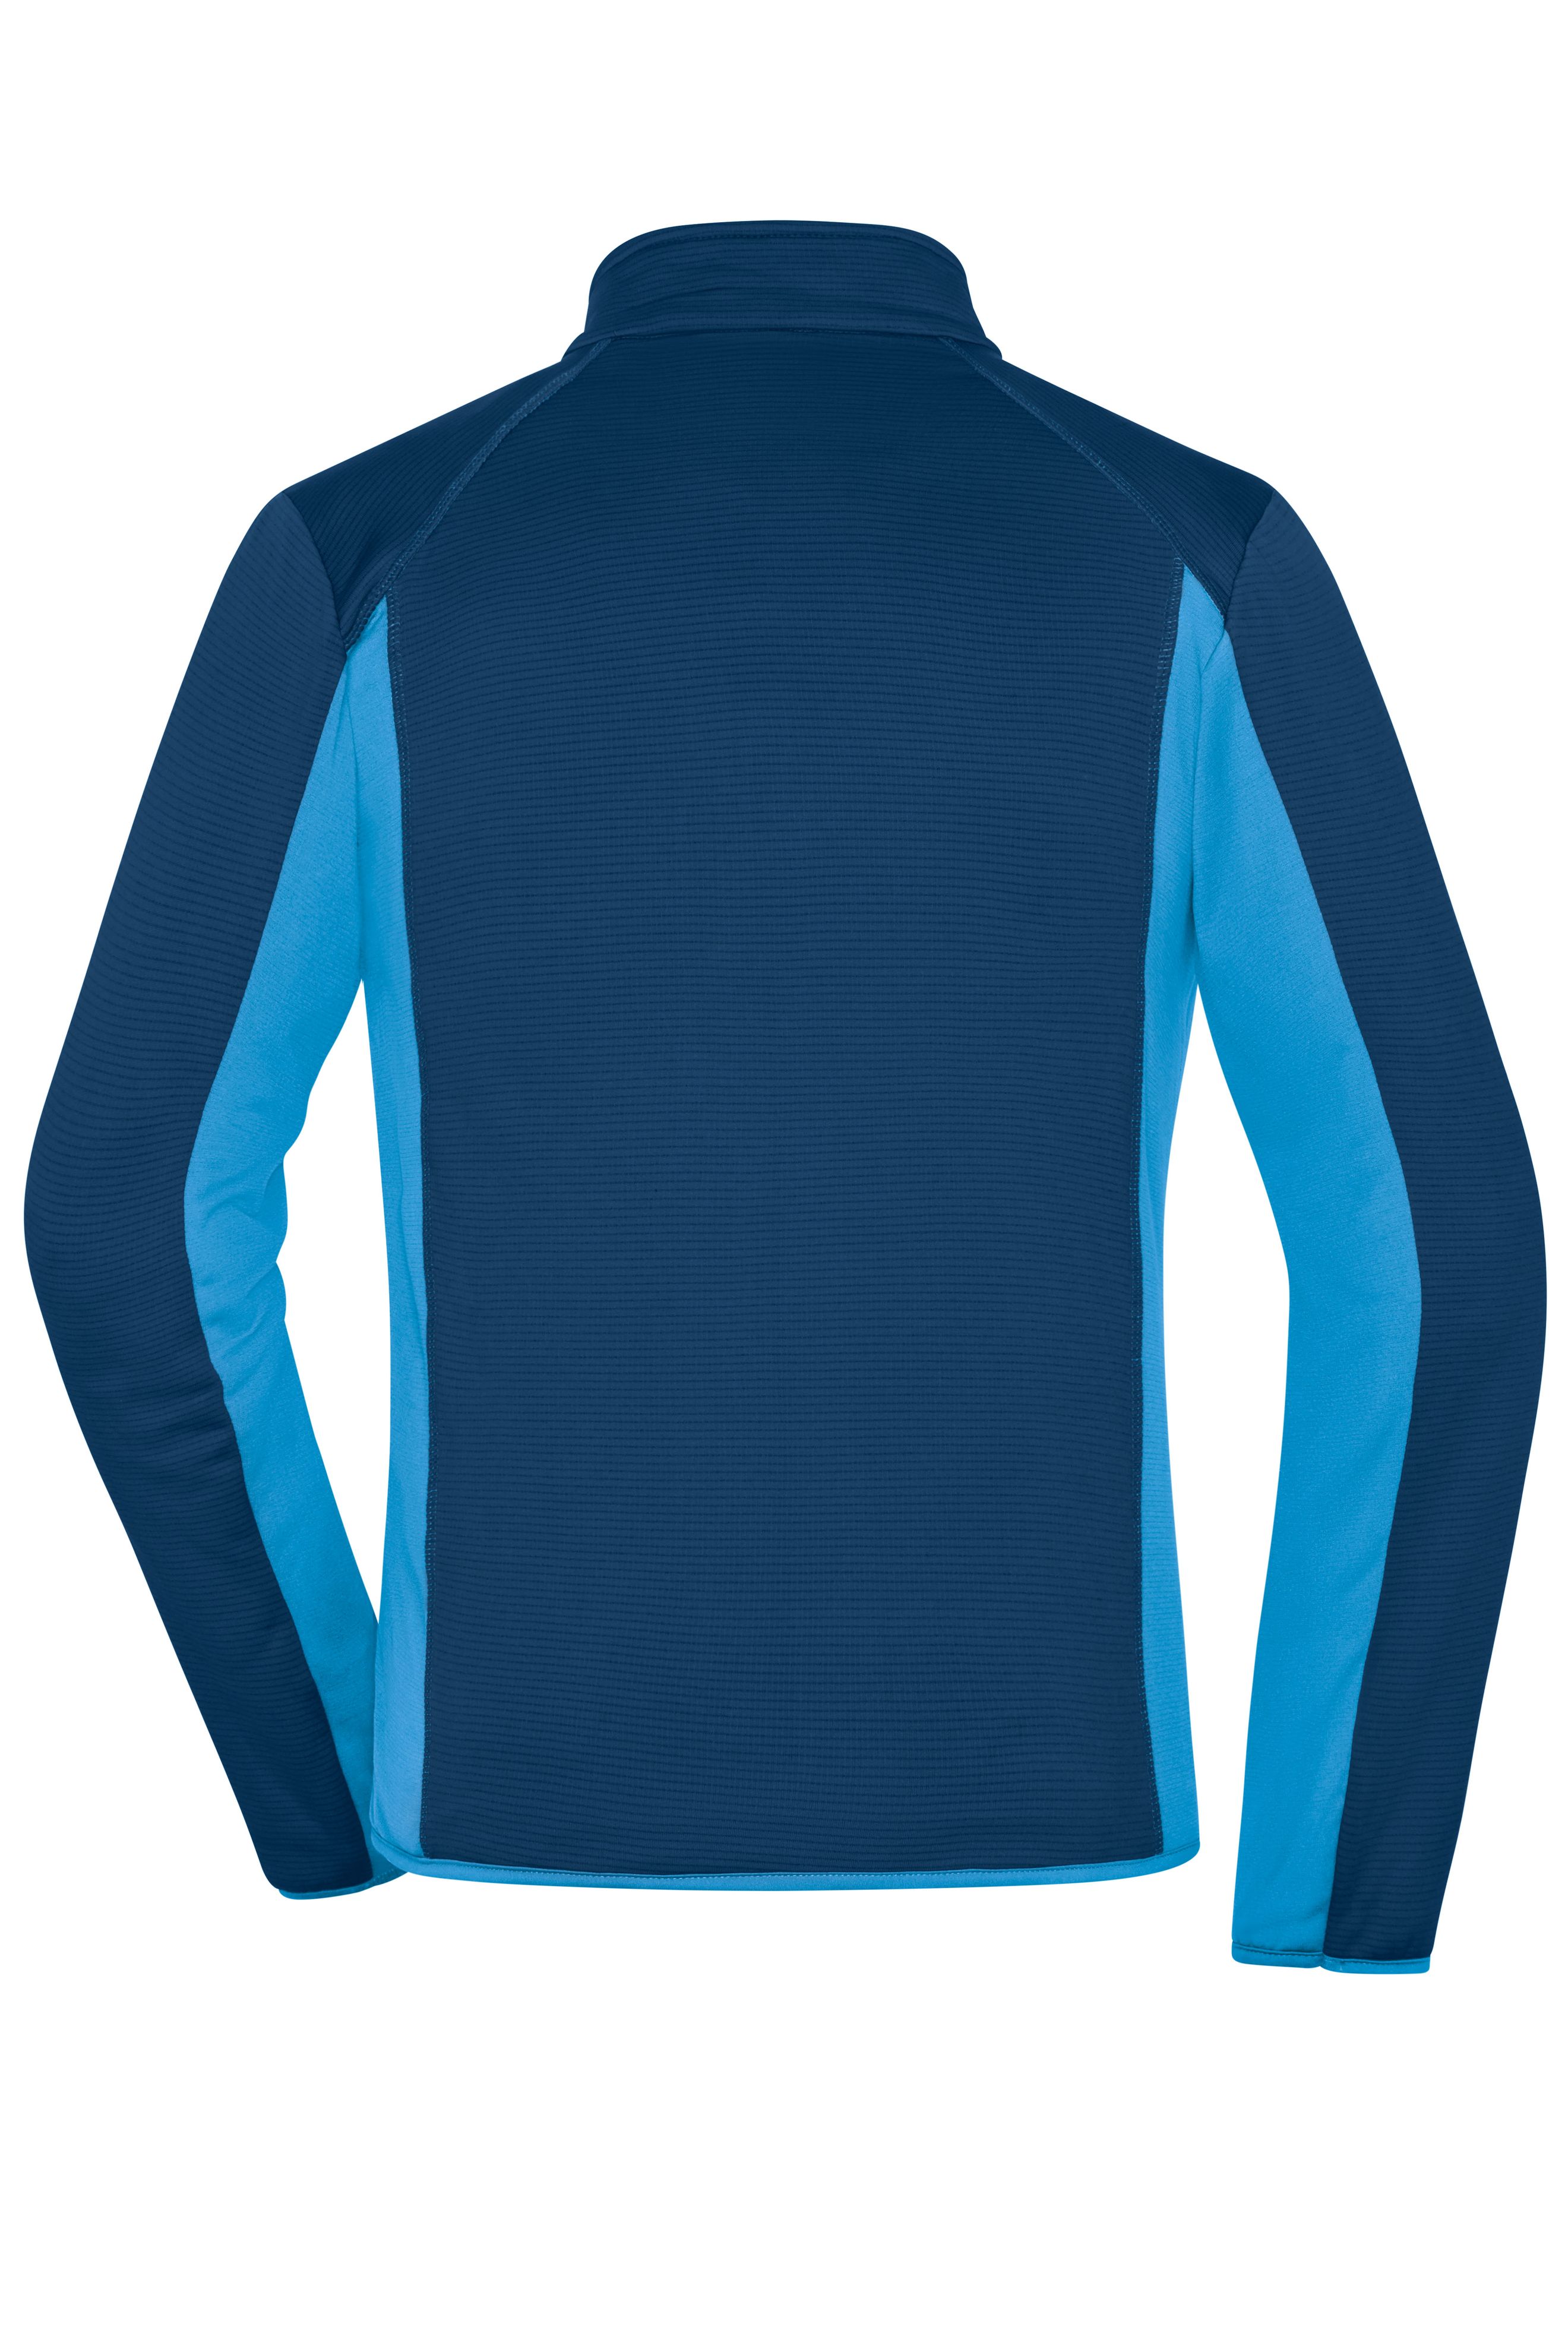 Men Men's Structure Fleece Jacket Navy/bright-blue-Daiber